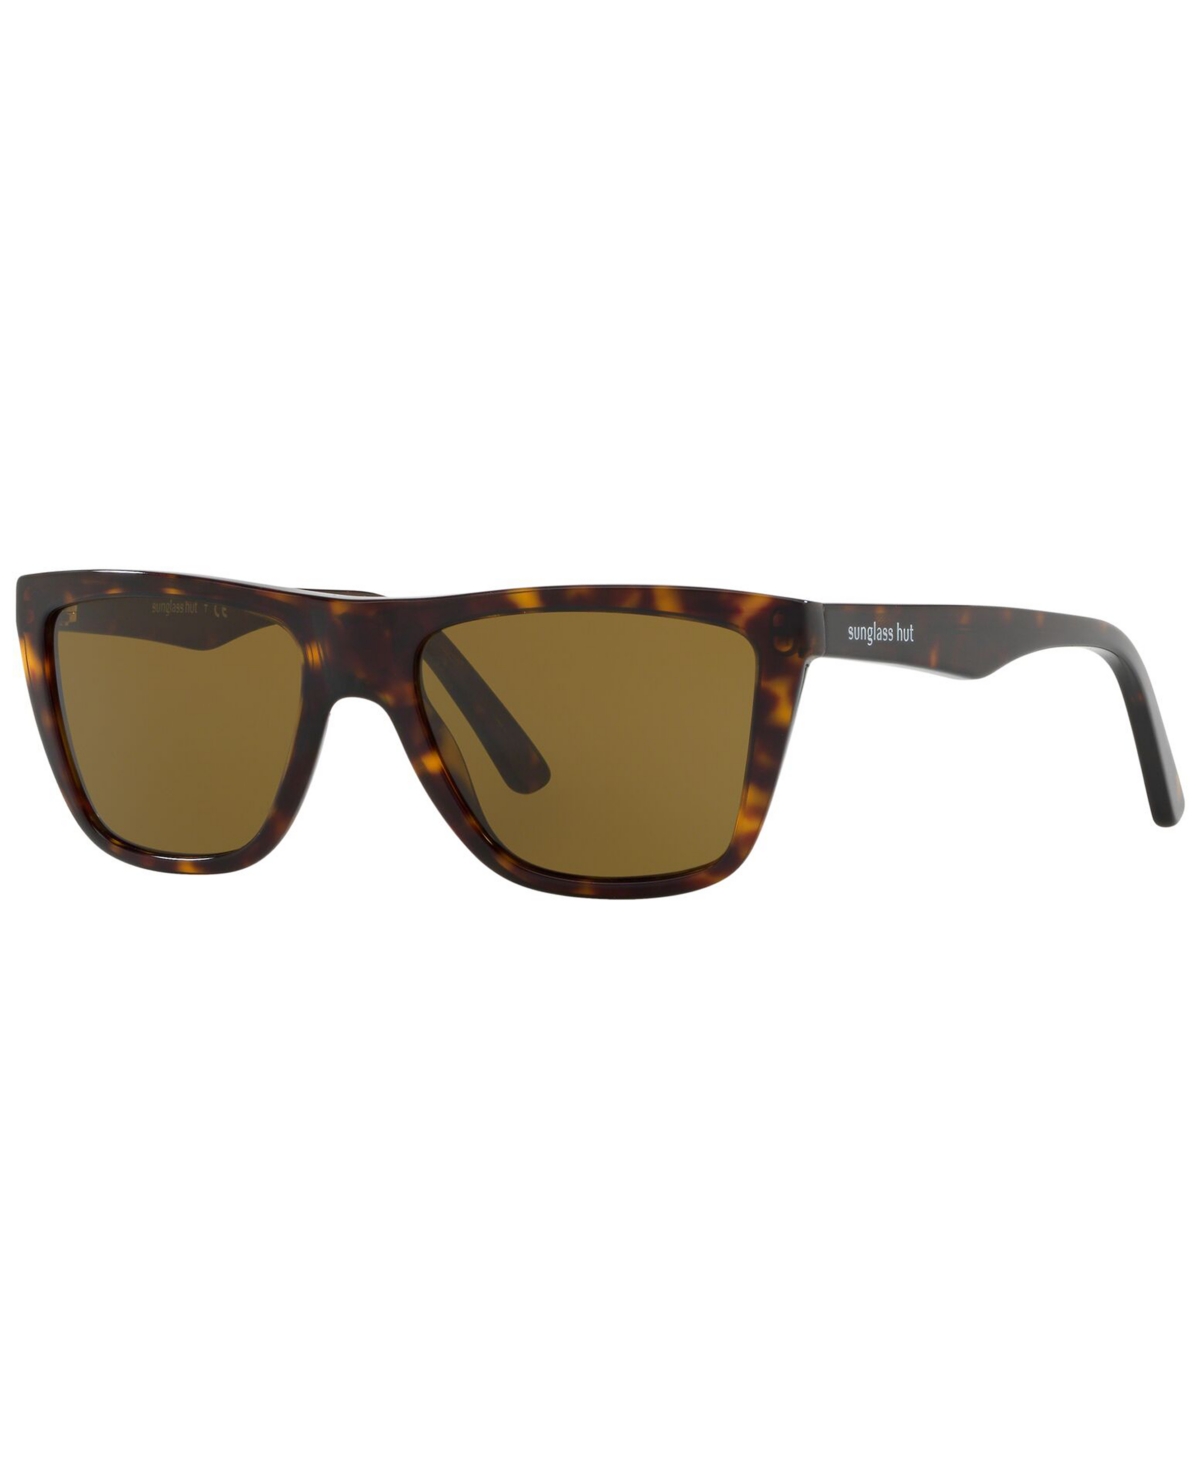 Men's Polarized Sunglasses, HU2014 - HAVANA/BROWN